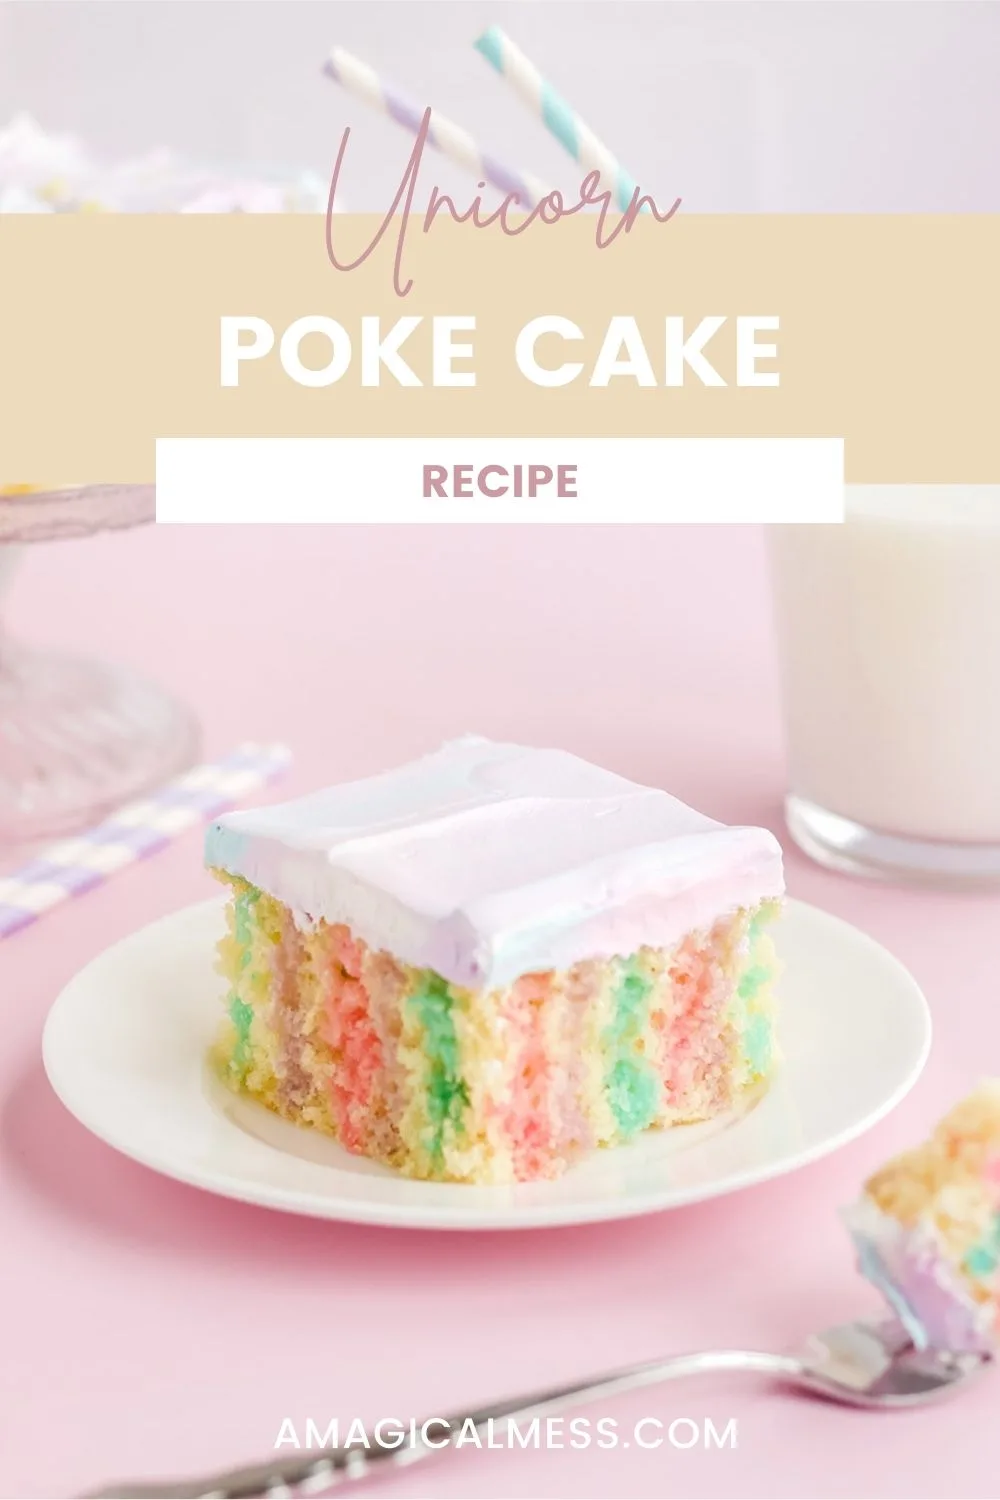 Unicorn jello poke cake on a plate with a pink background.